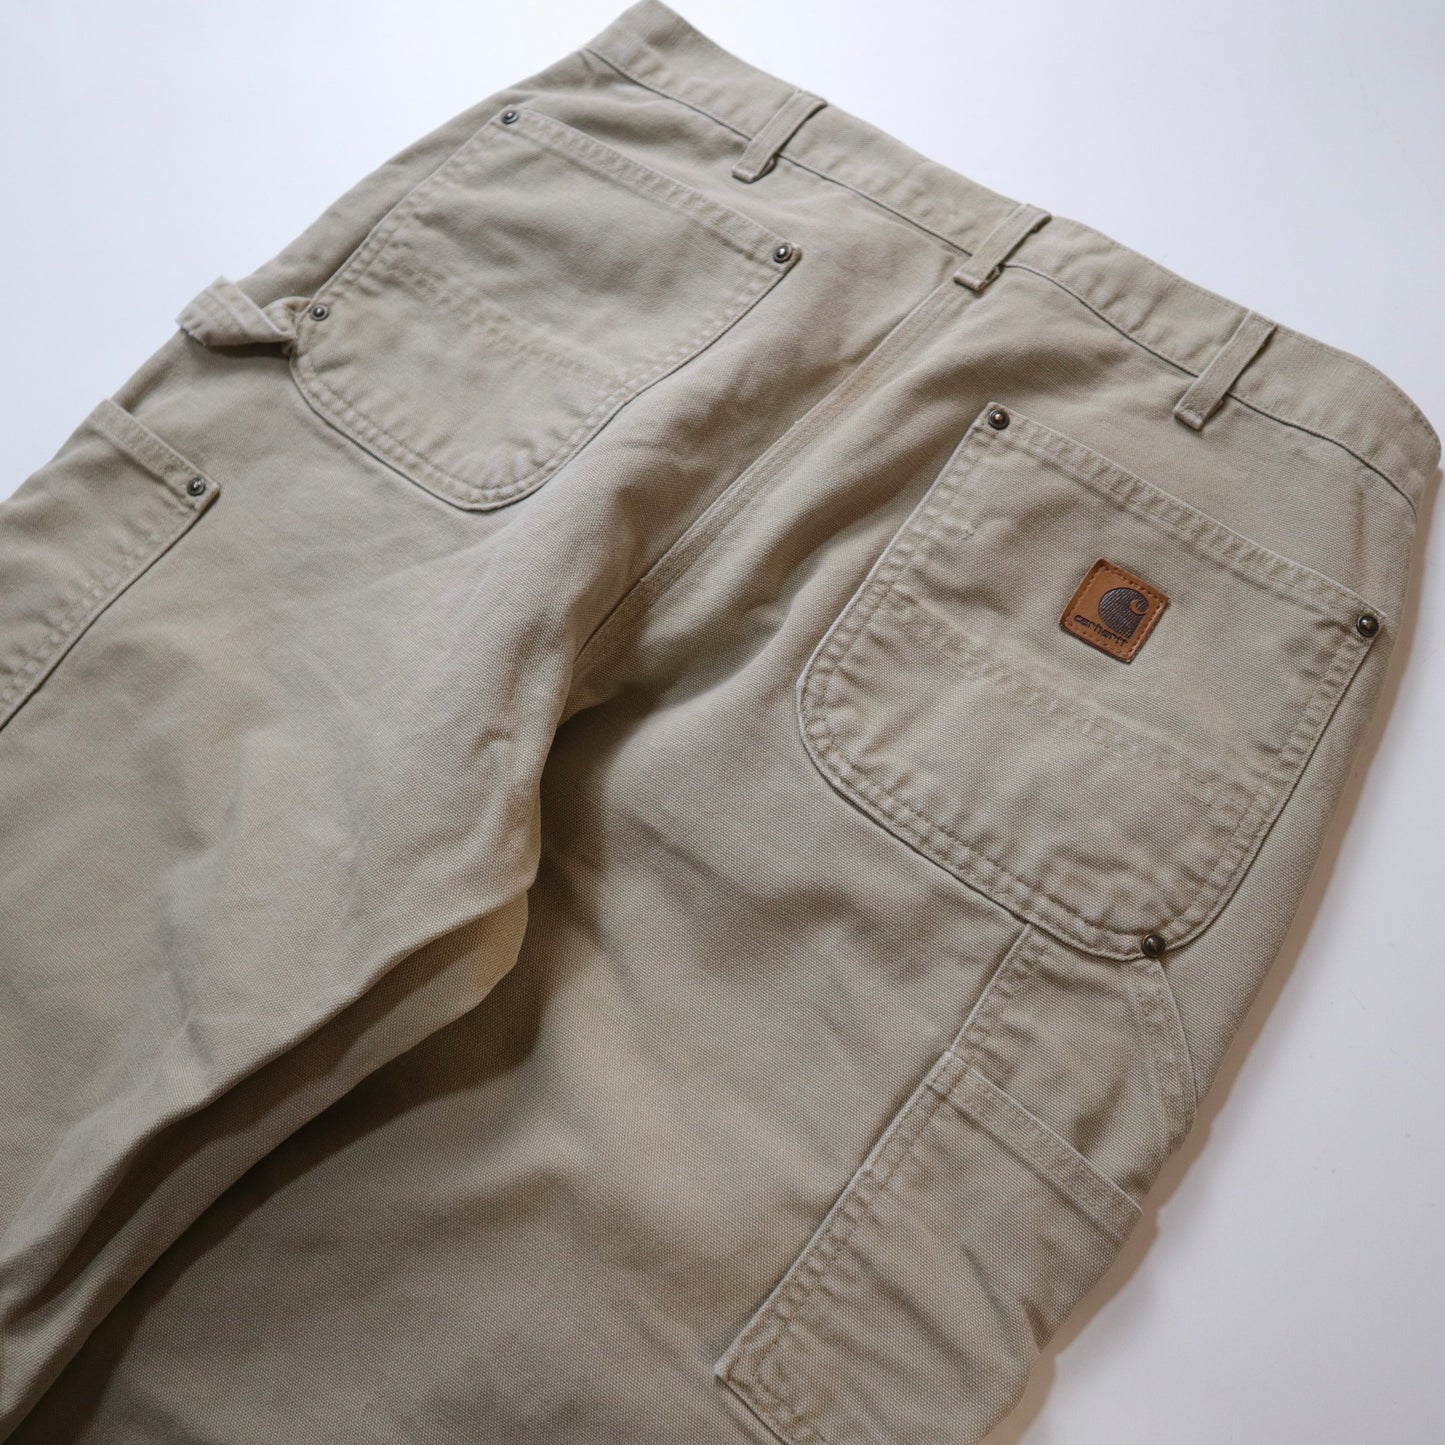 (33W) Carhartt American-made Double knee light khaki work pants